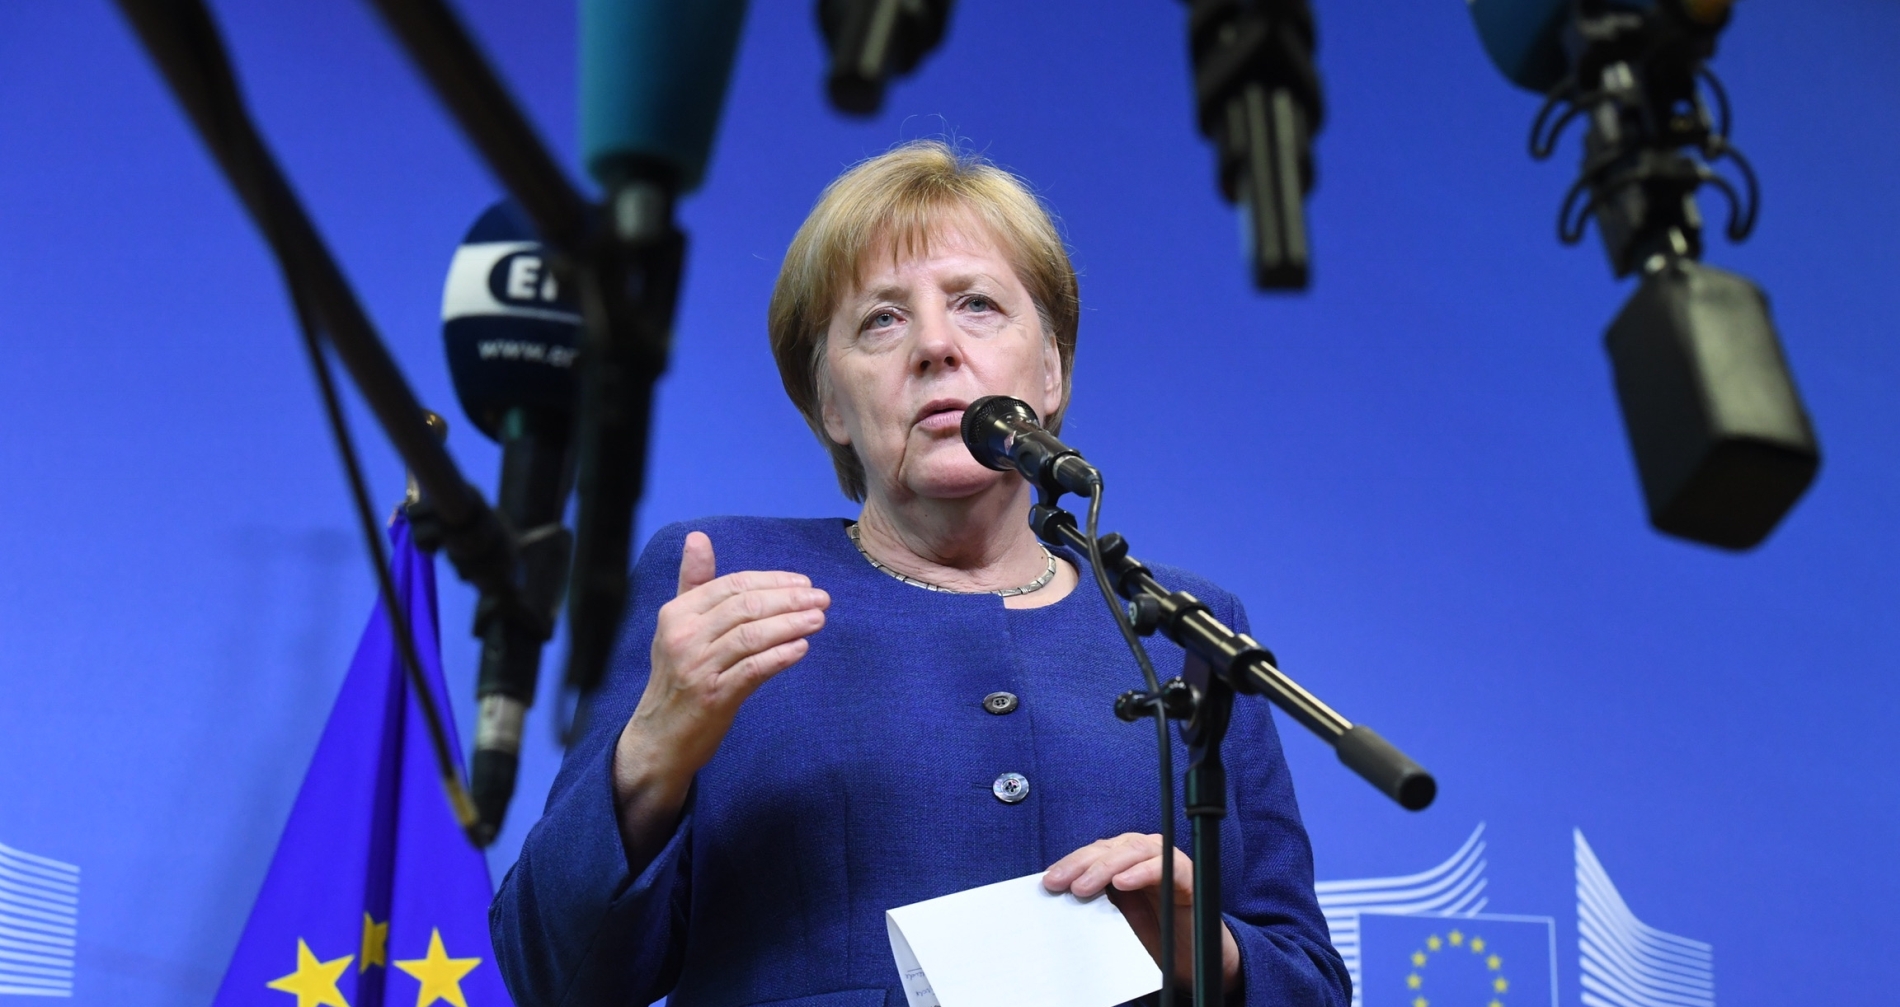 Velik, paneuropski interes za skup HDZ-a sa spitzenkandidatom Weberom i kancelarkom Merkel  